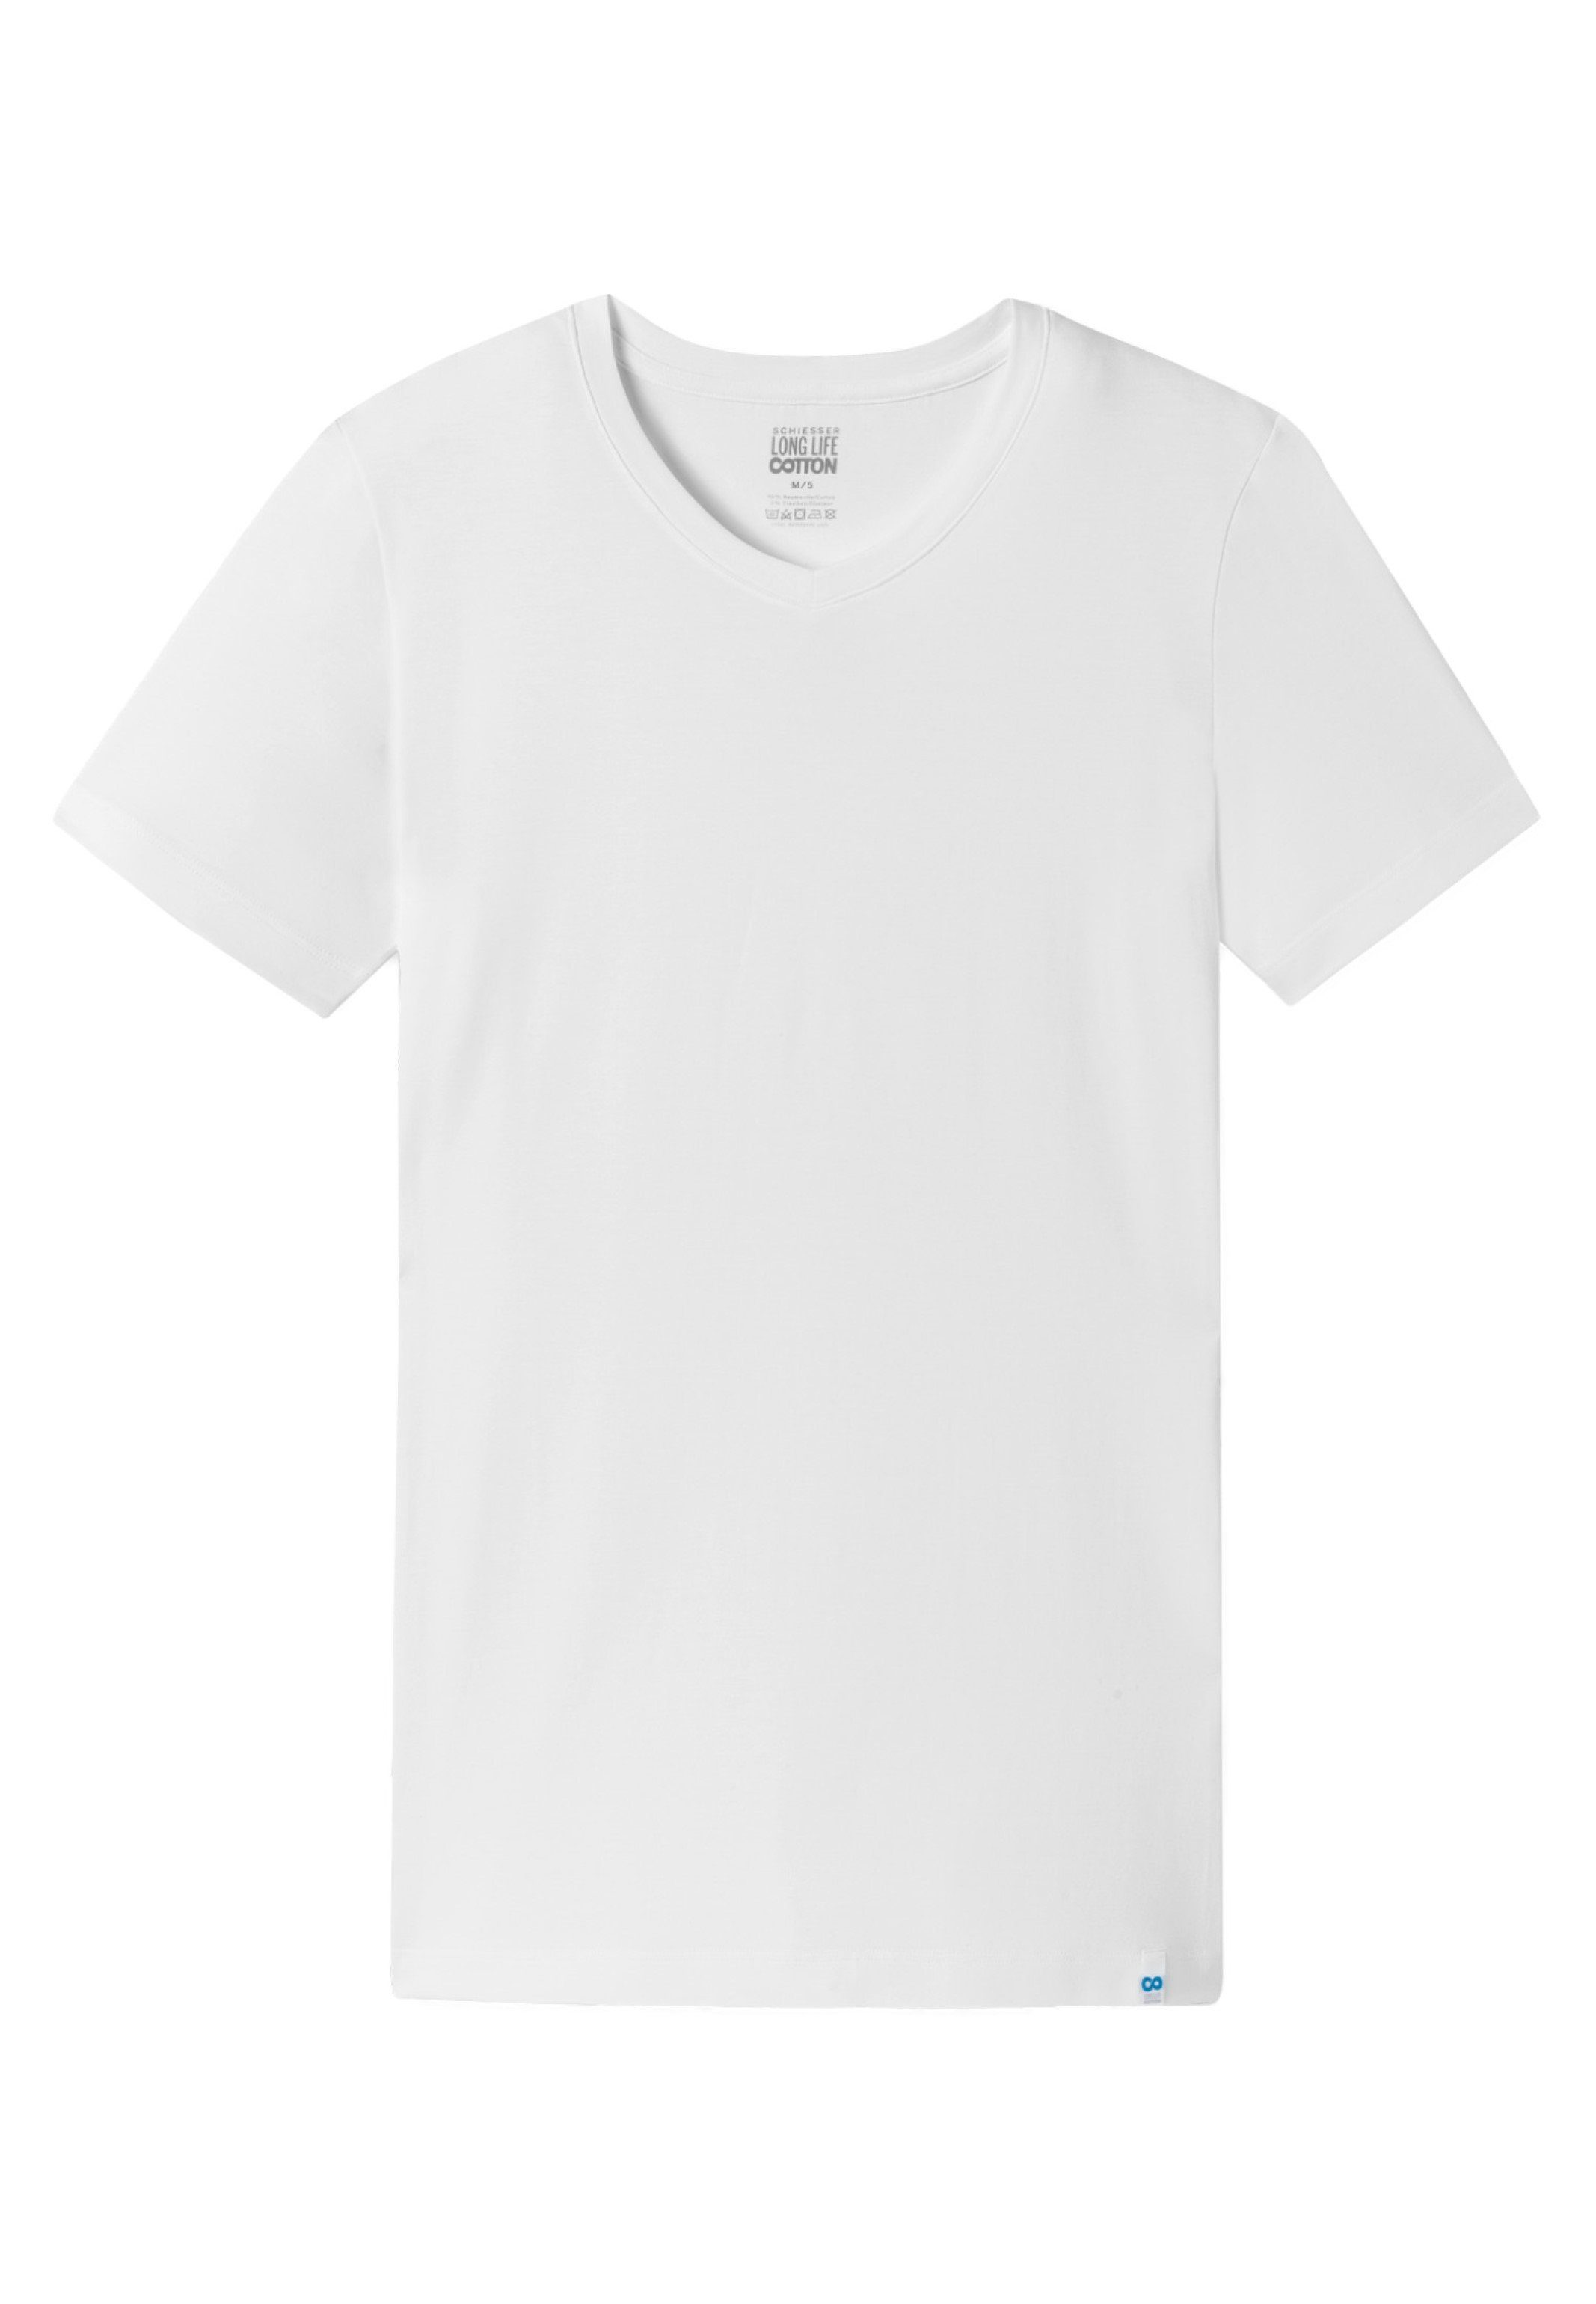 Schiesser Unterhemd Cotton Life Baumwolle Weiß Shirt (1-St) - Kurzarm / Unterhemd - Long